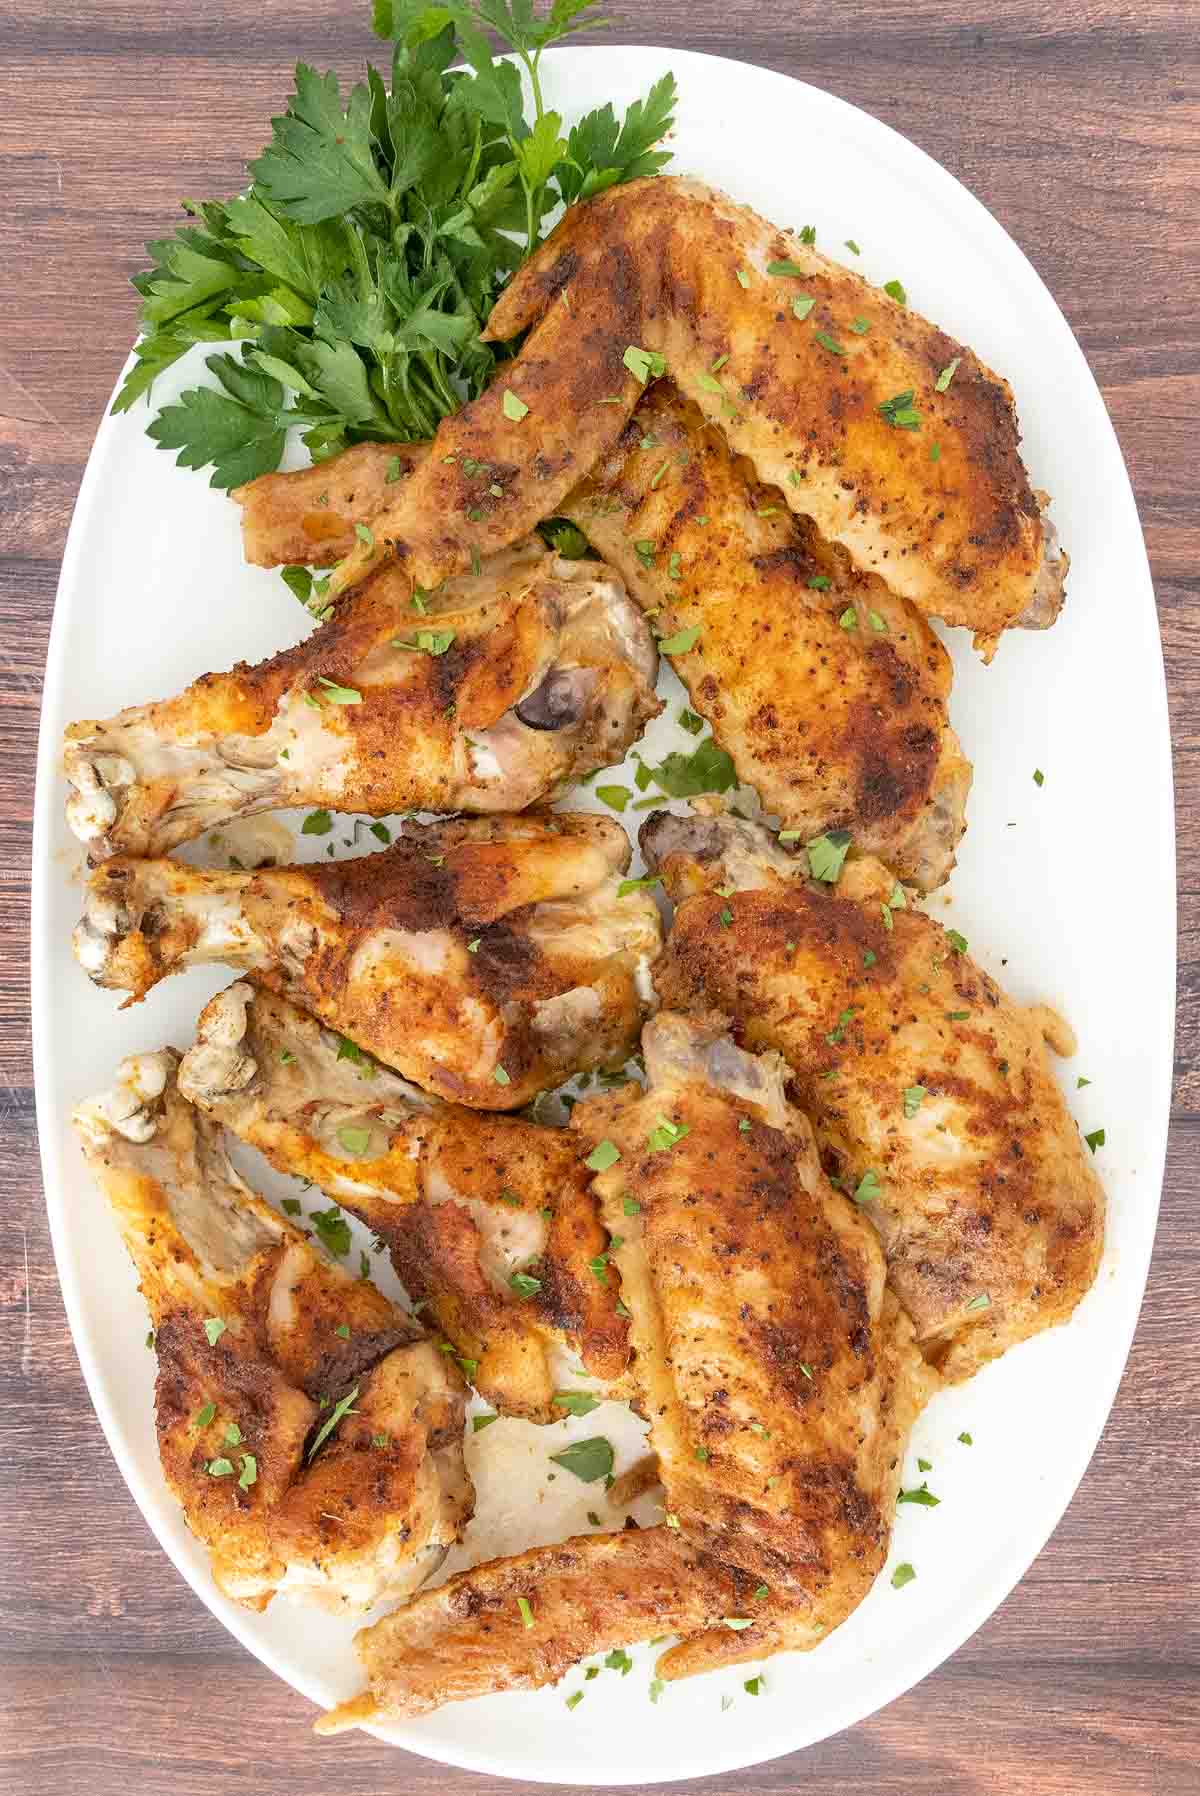 Baked Turkey Wings (CRISPY Skin And JUICY Meat!)